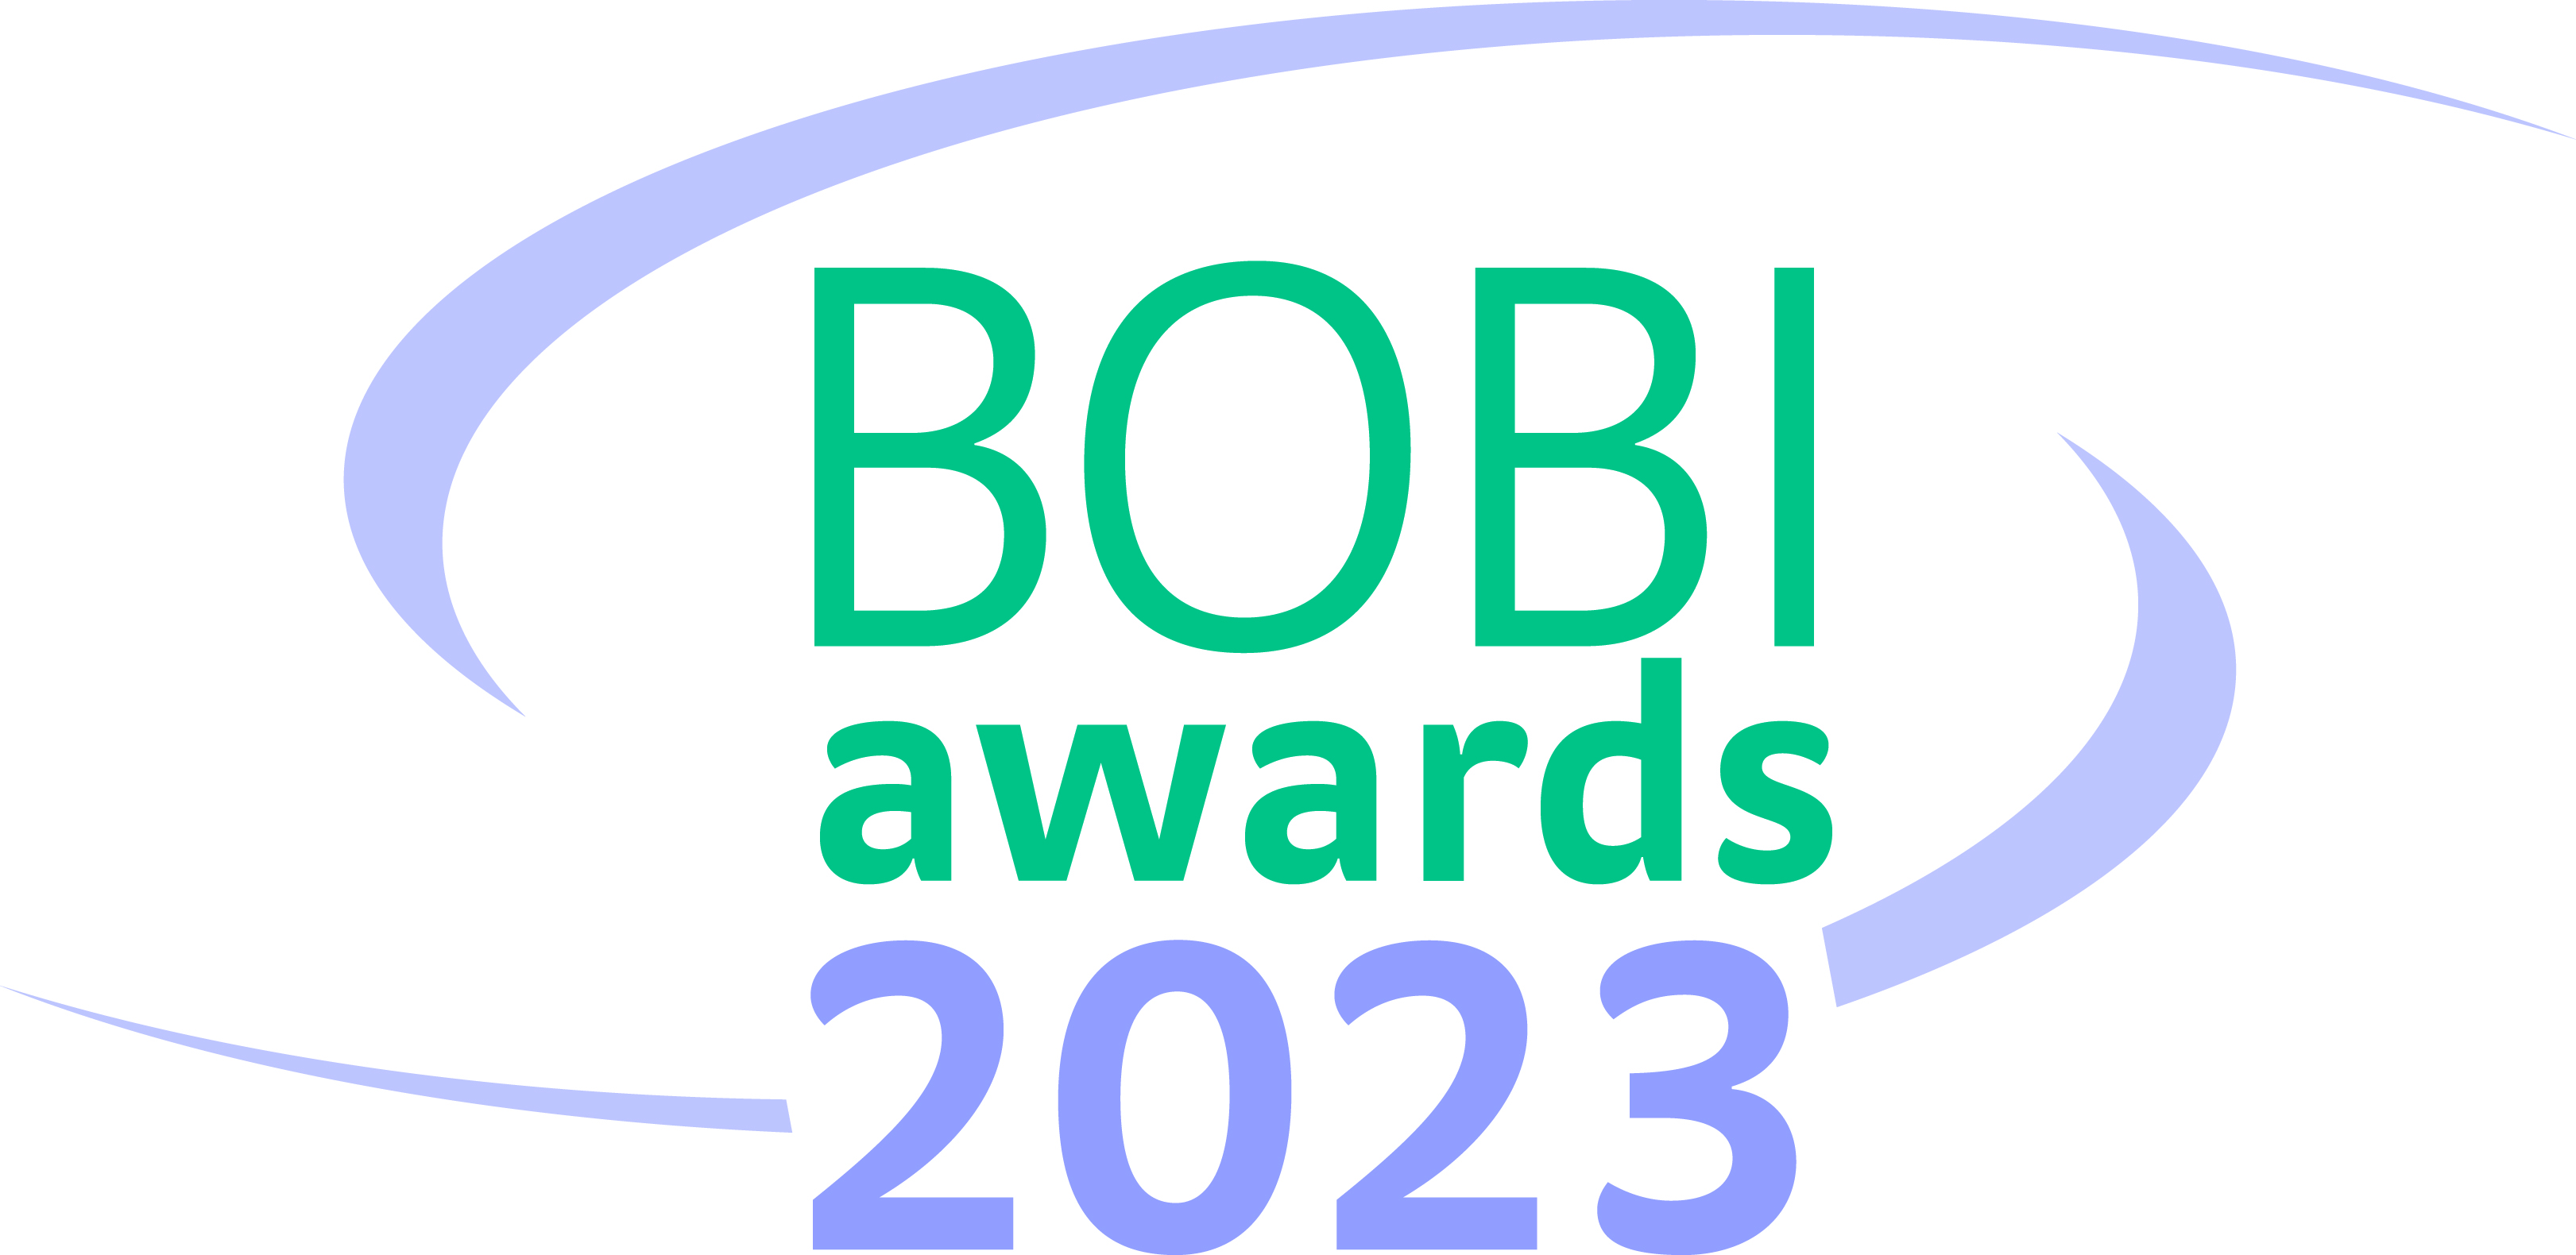 BOBI Awards 2023 - Best Business Impact finalist